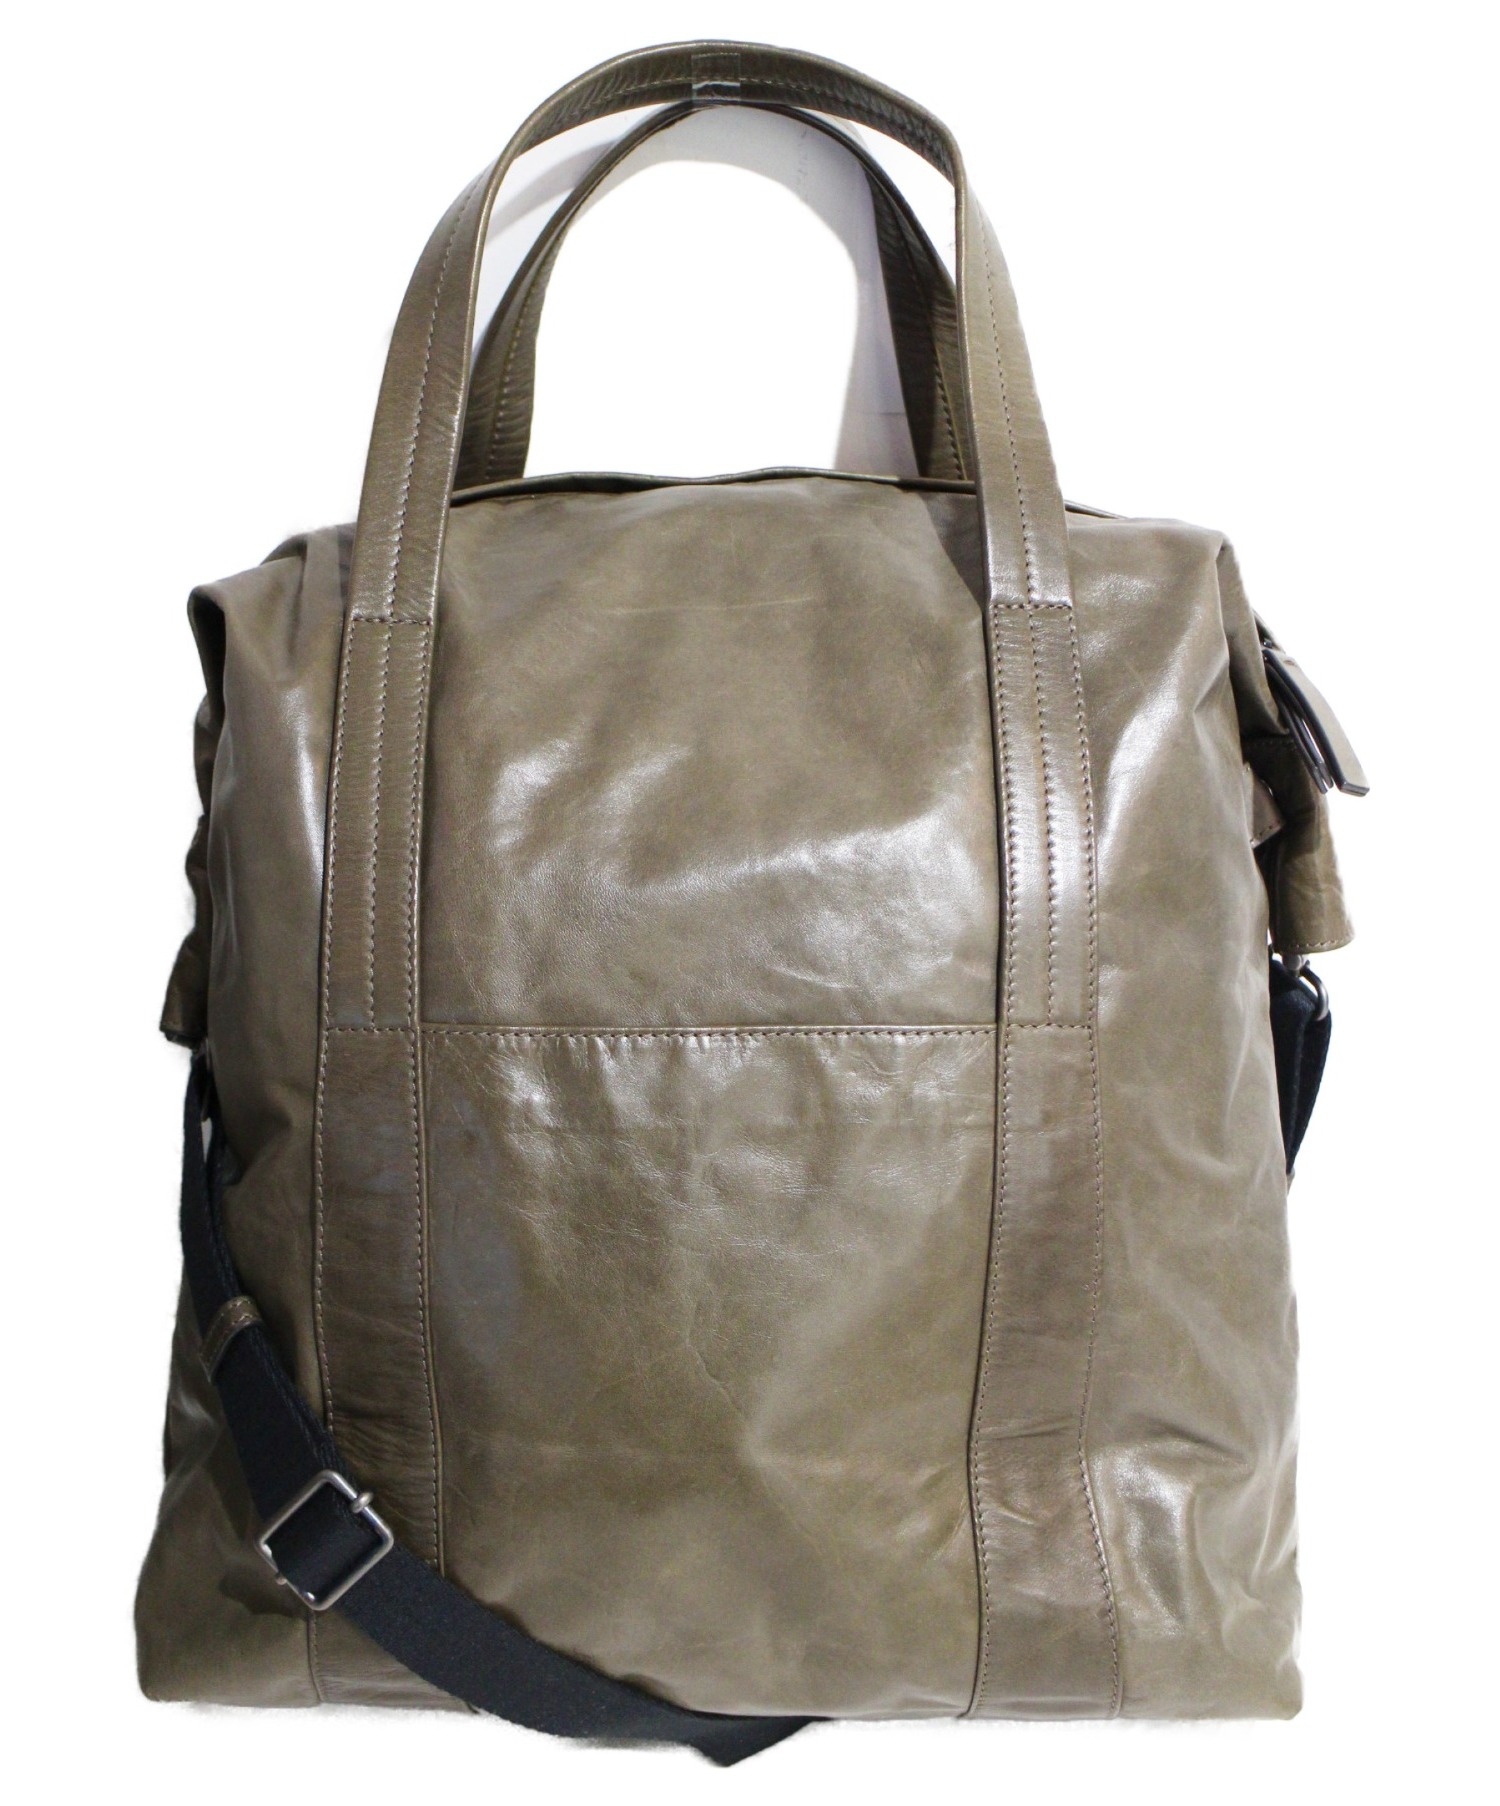 Maison Margiela (メゾンマルジェラ) Sailor Bag オリーブ サイズ:- S35WC0044 SX9218